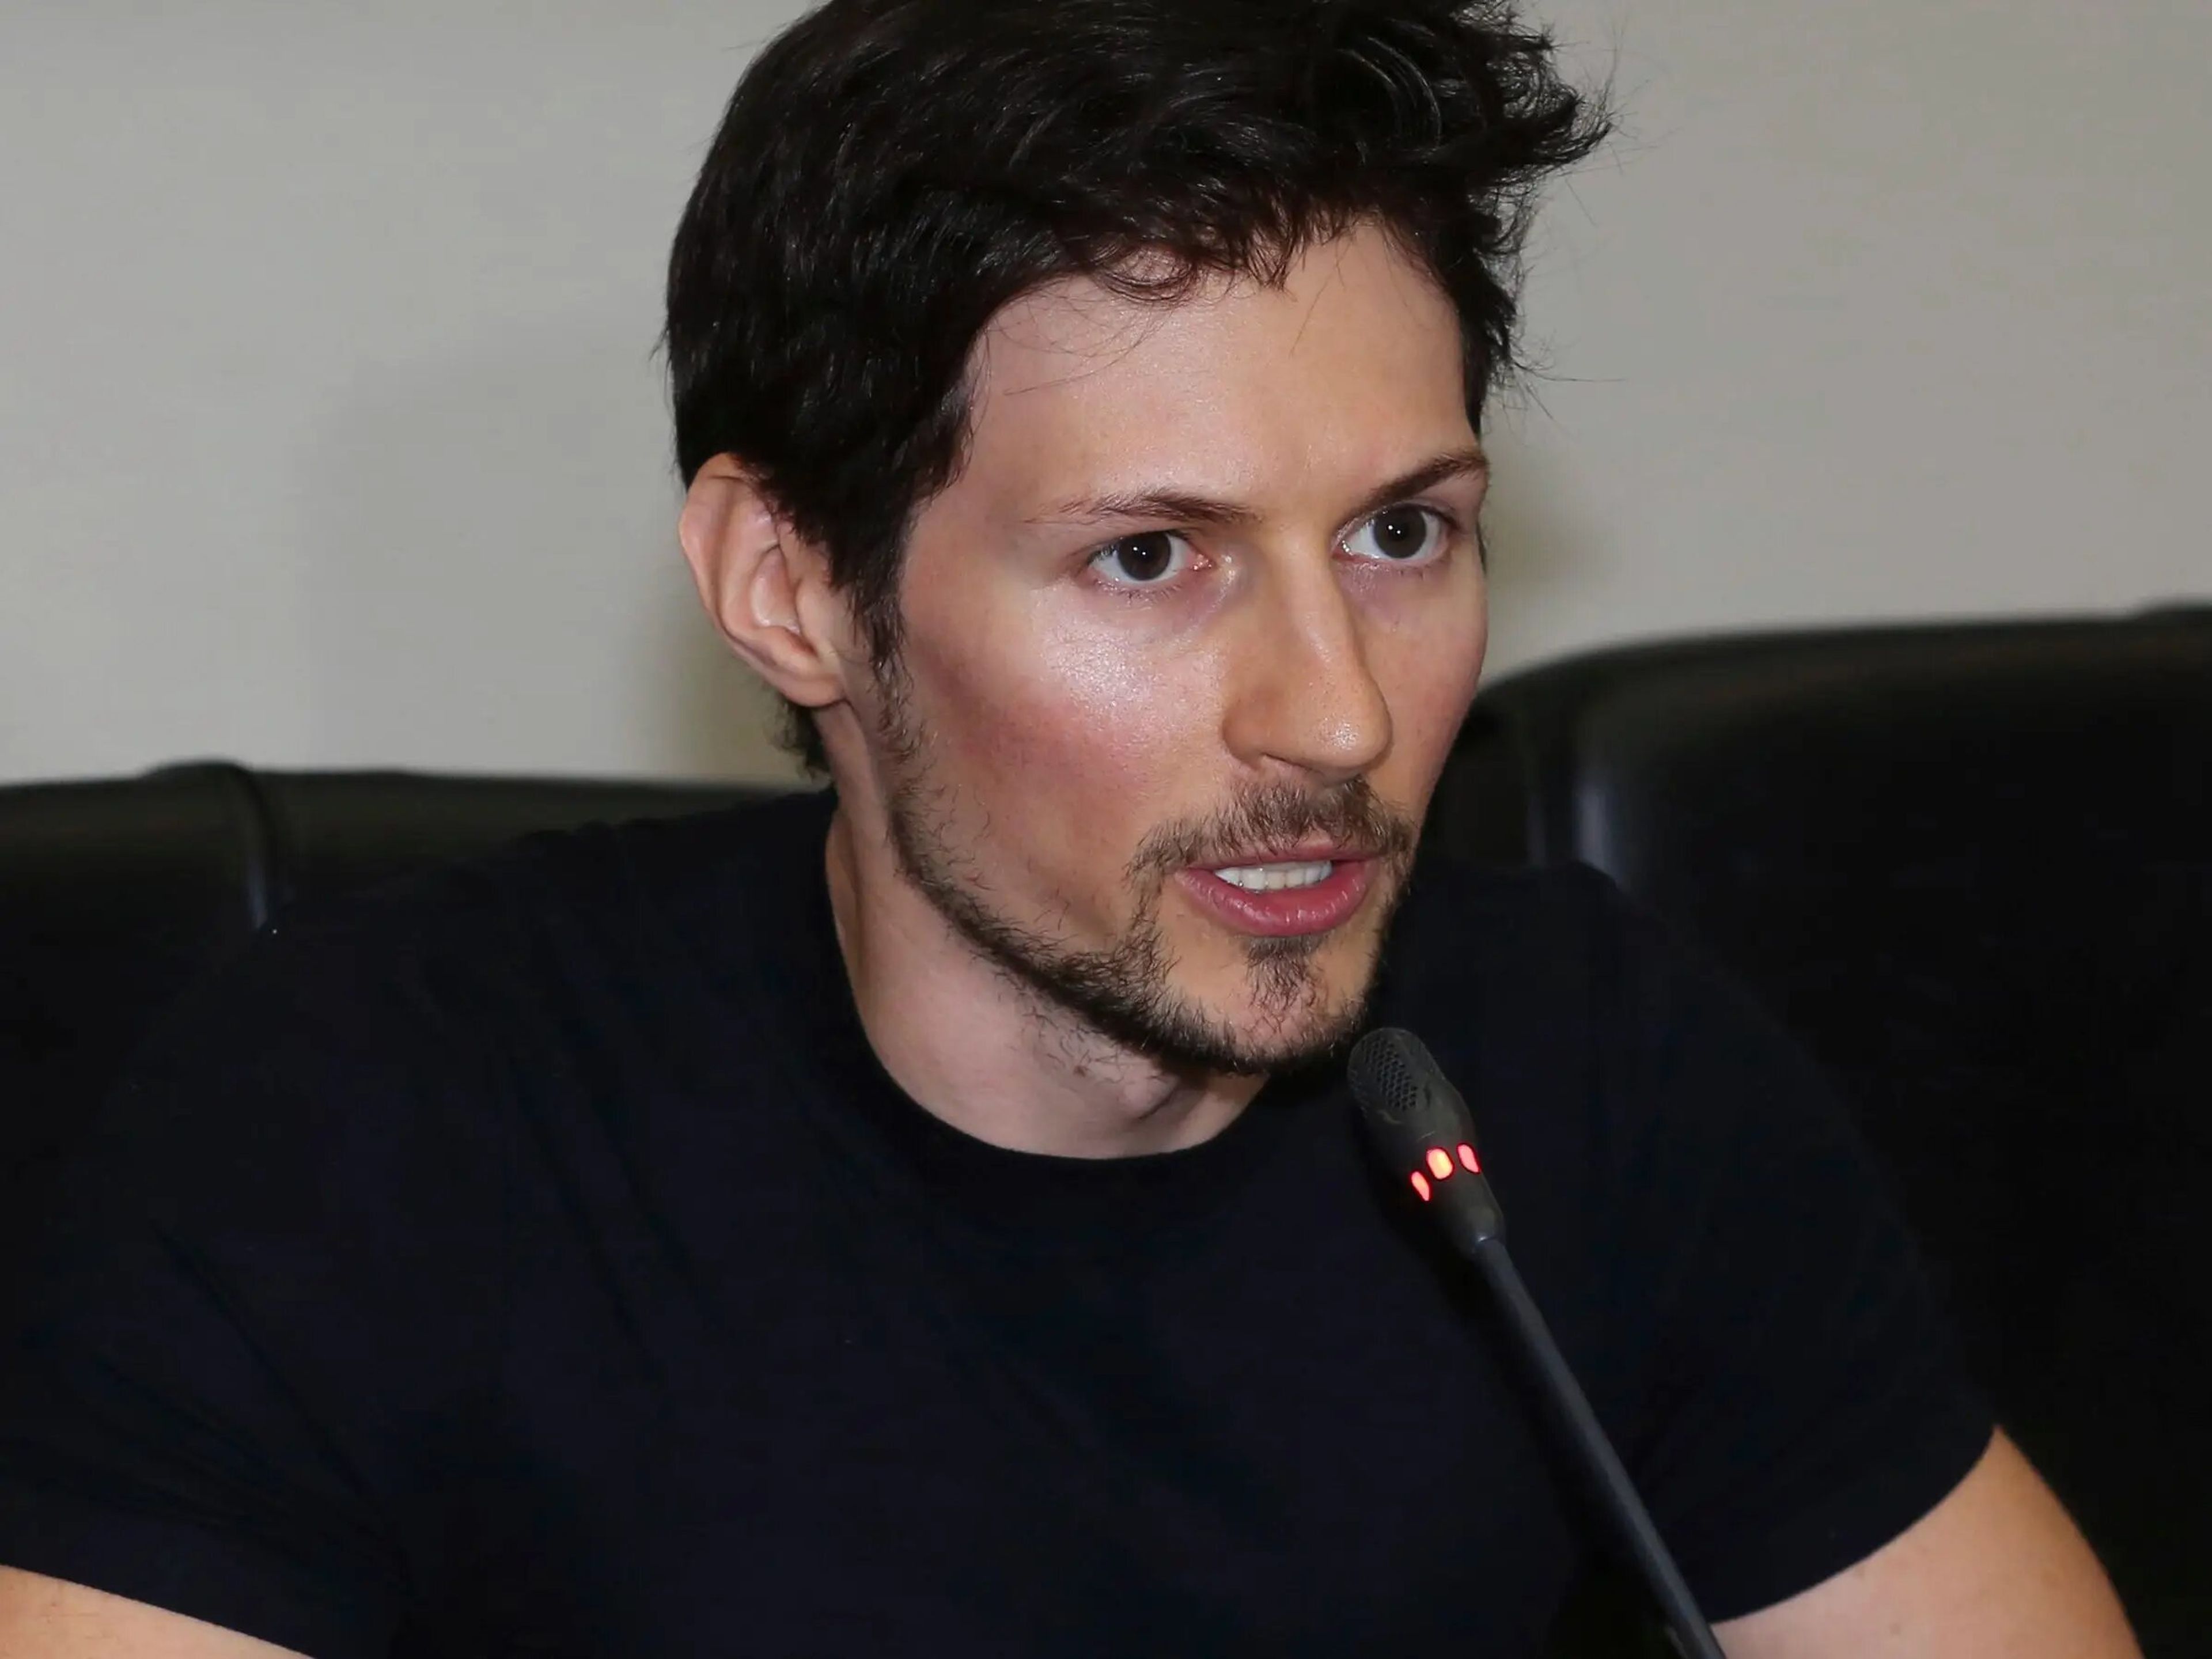 El fundador de Telegram, Pavel Durov